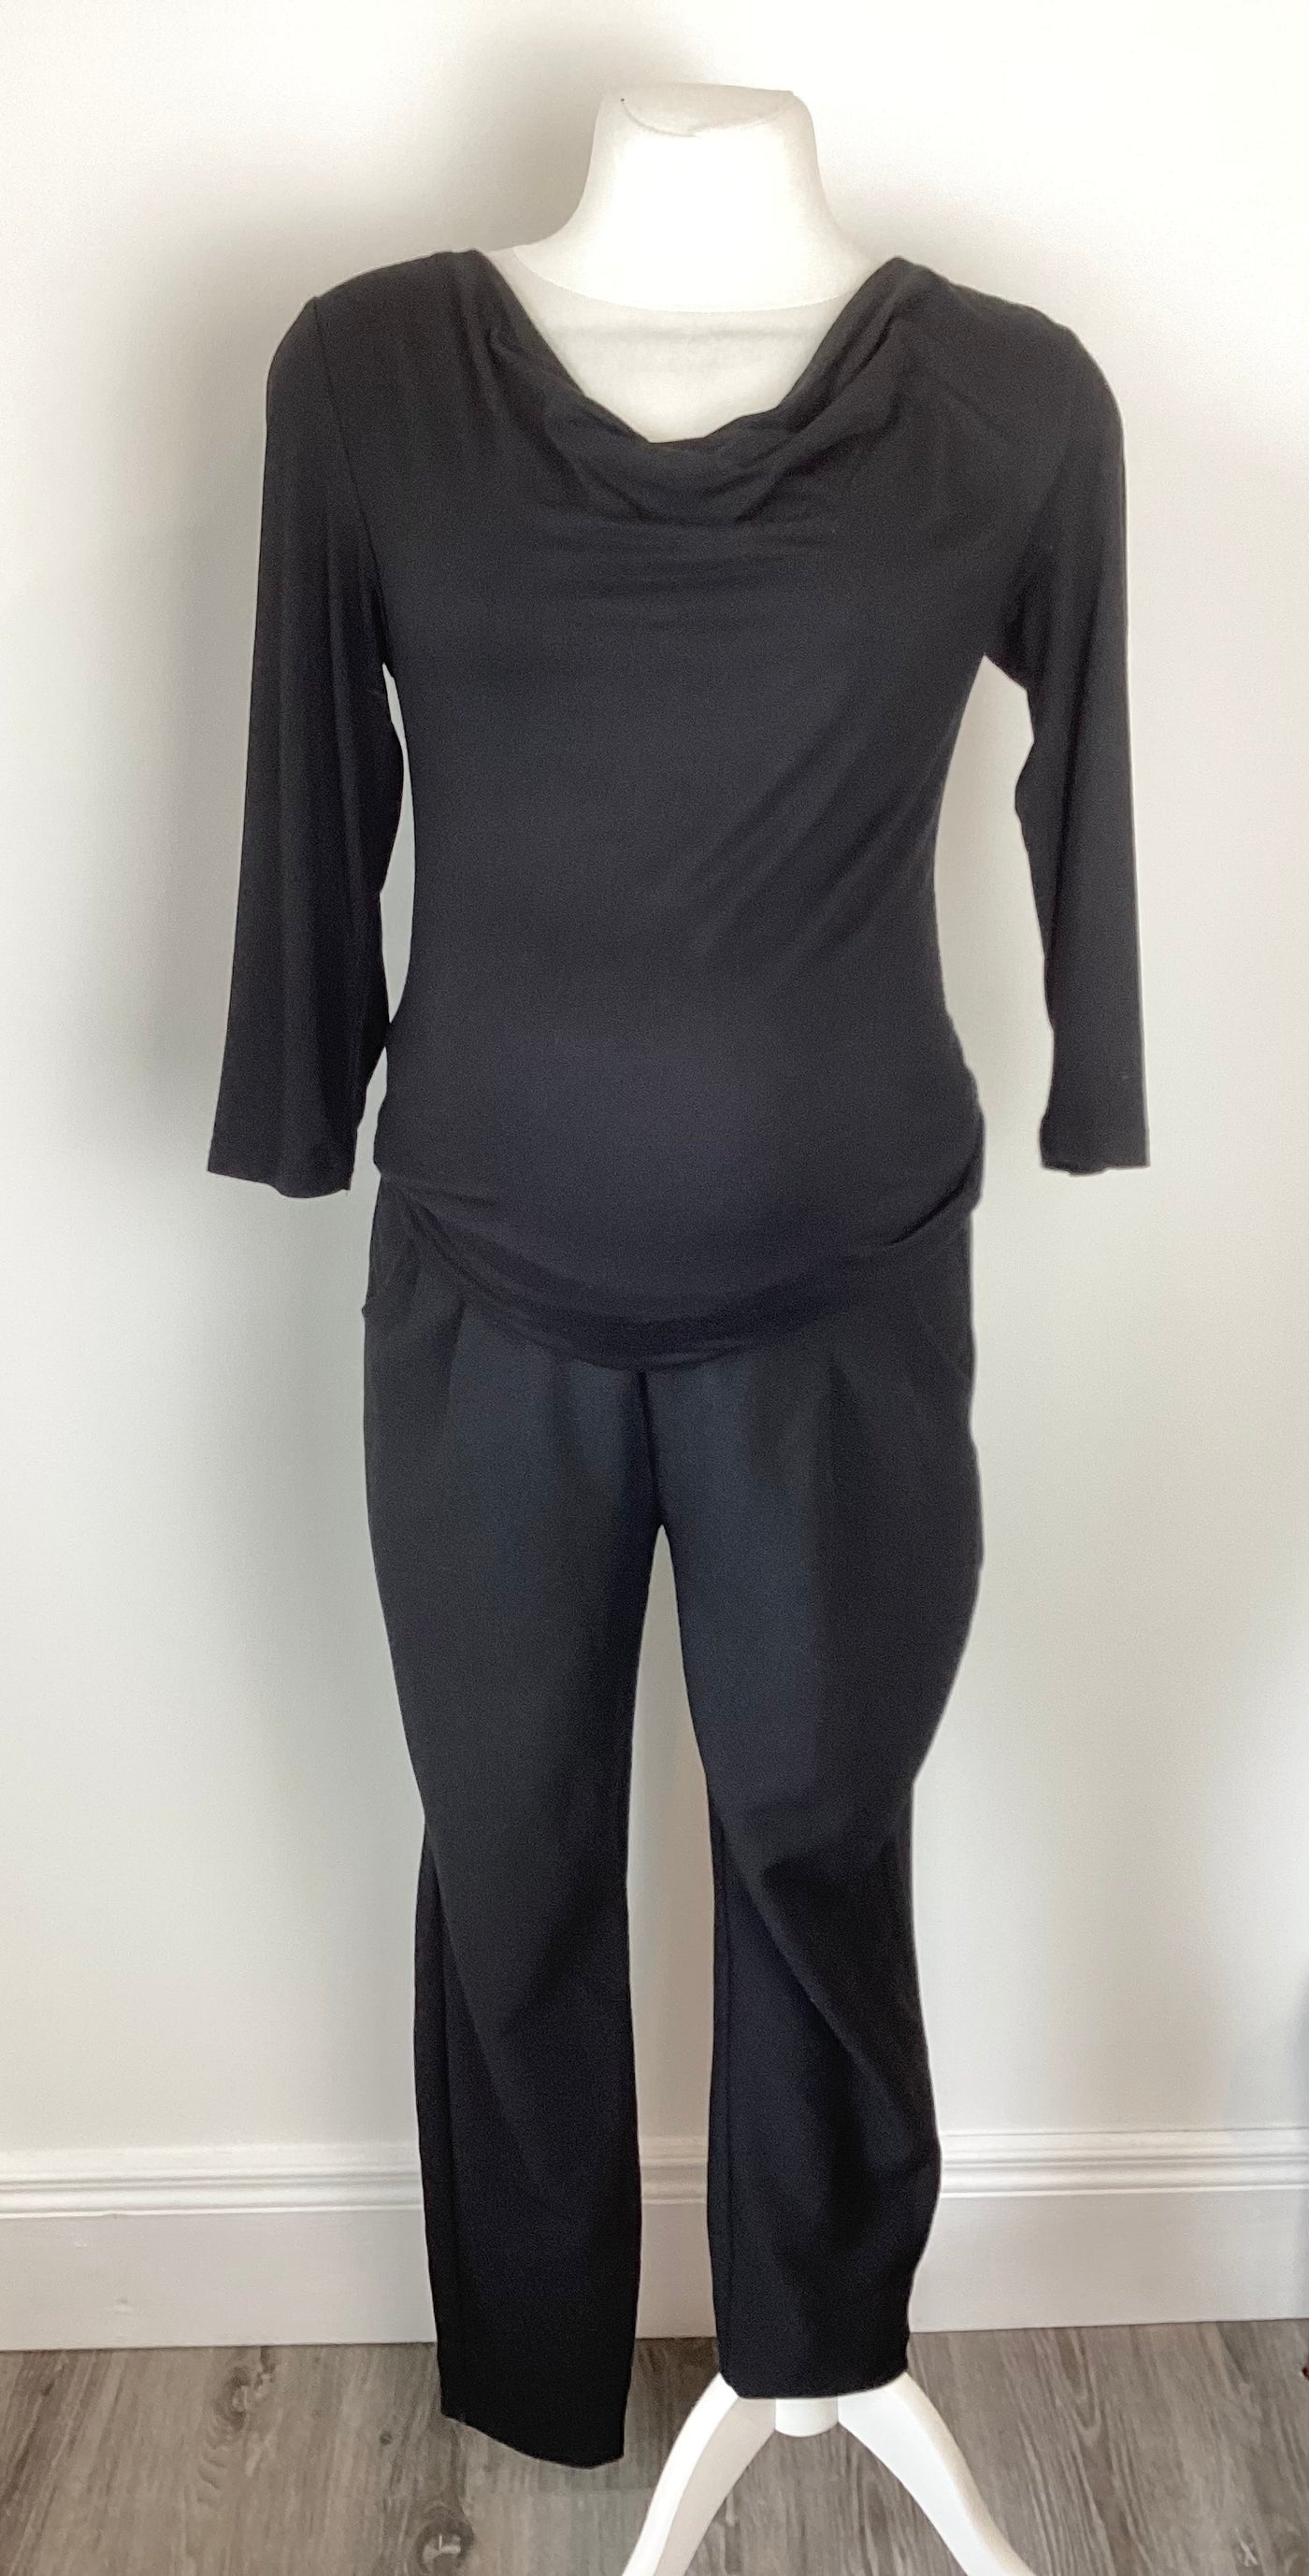 Mamalicious black 3/4 sleeve jumpsuit - Size S (Approx UK 8/10)